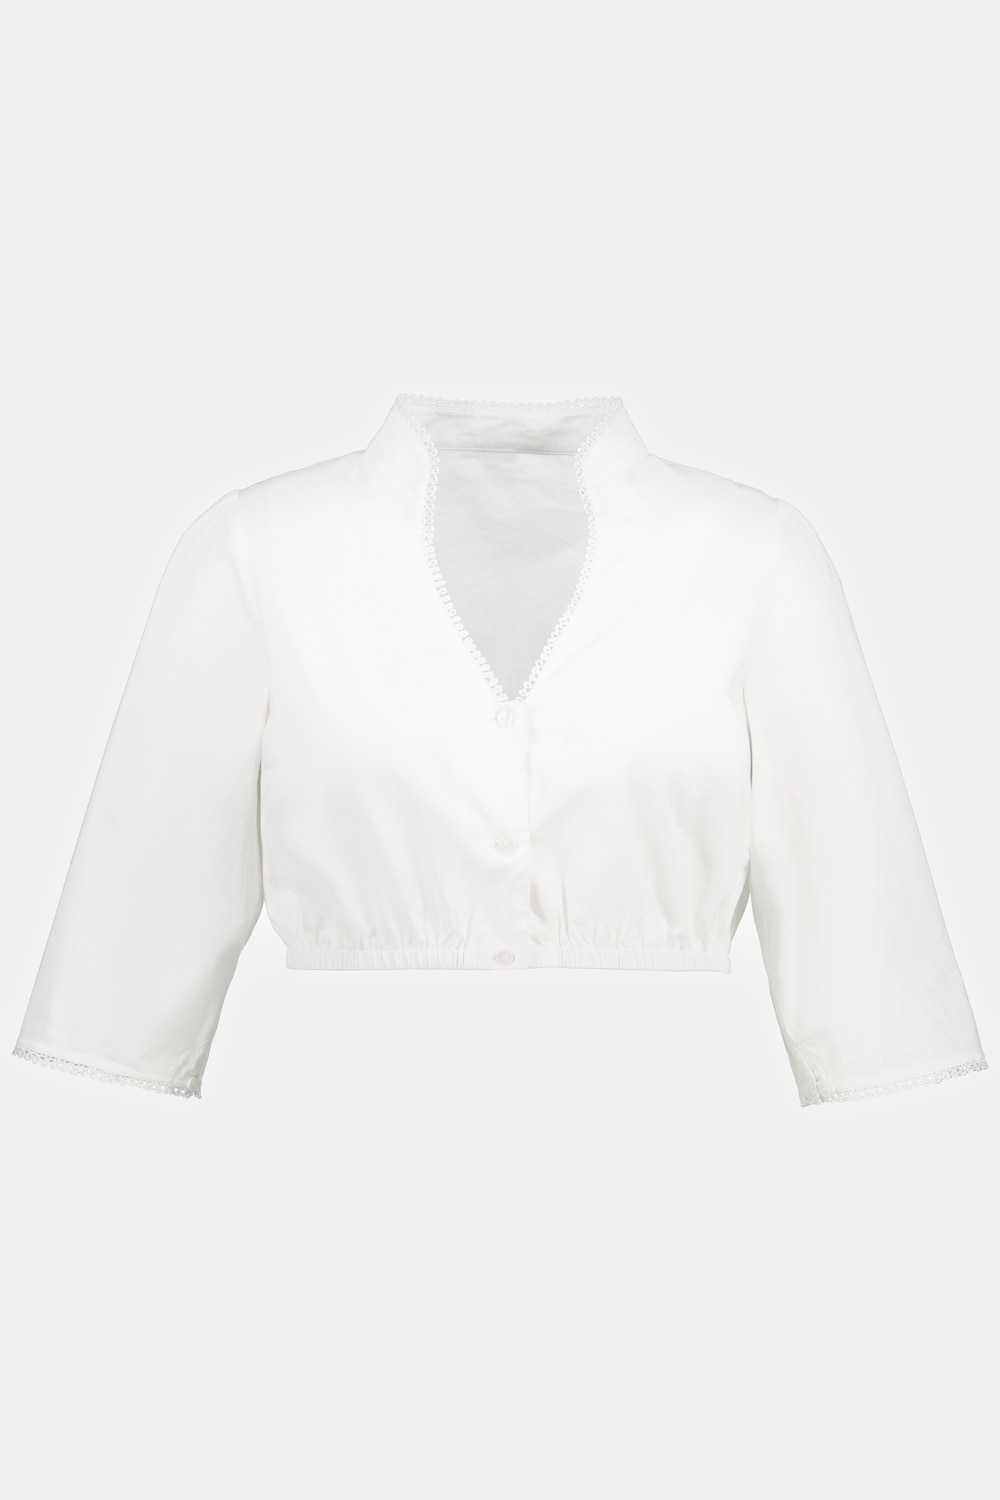 Grote Maten folklore blouse, Dames, wit, Maat: 58, Polyester/Katoen, Ulla Popken